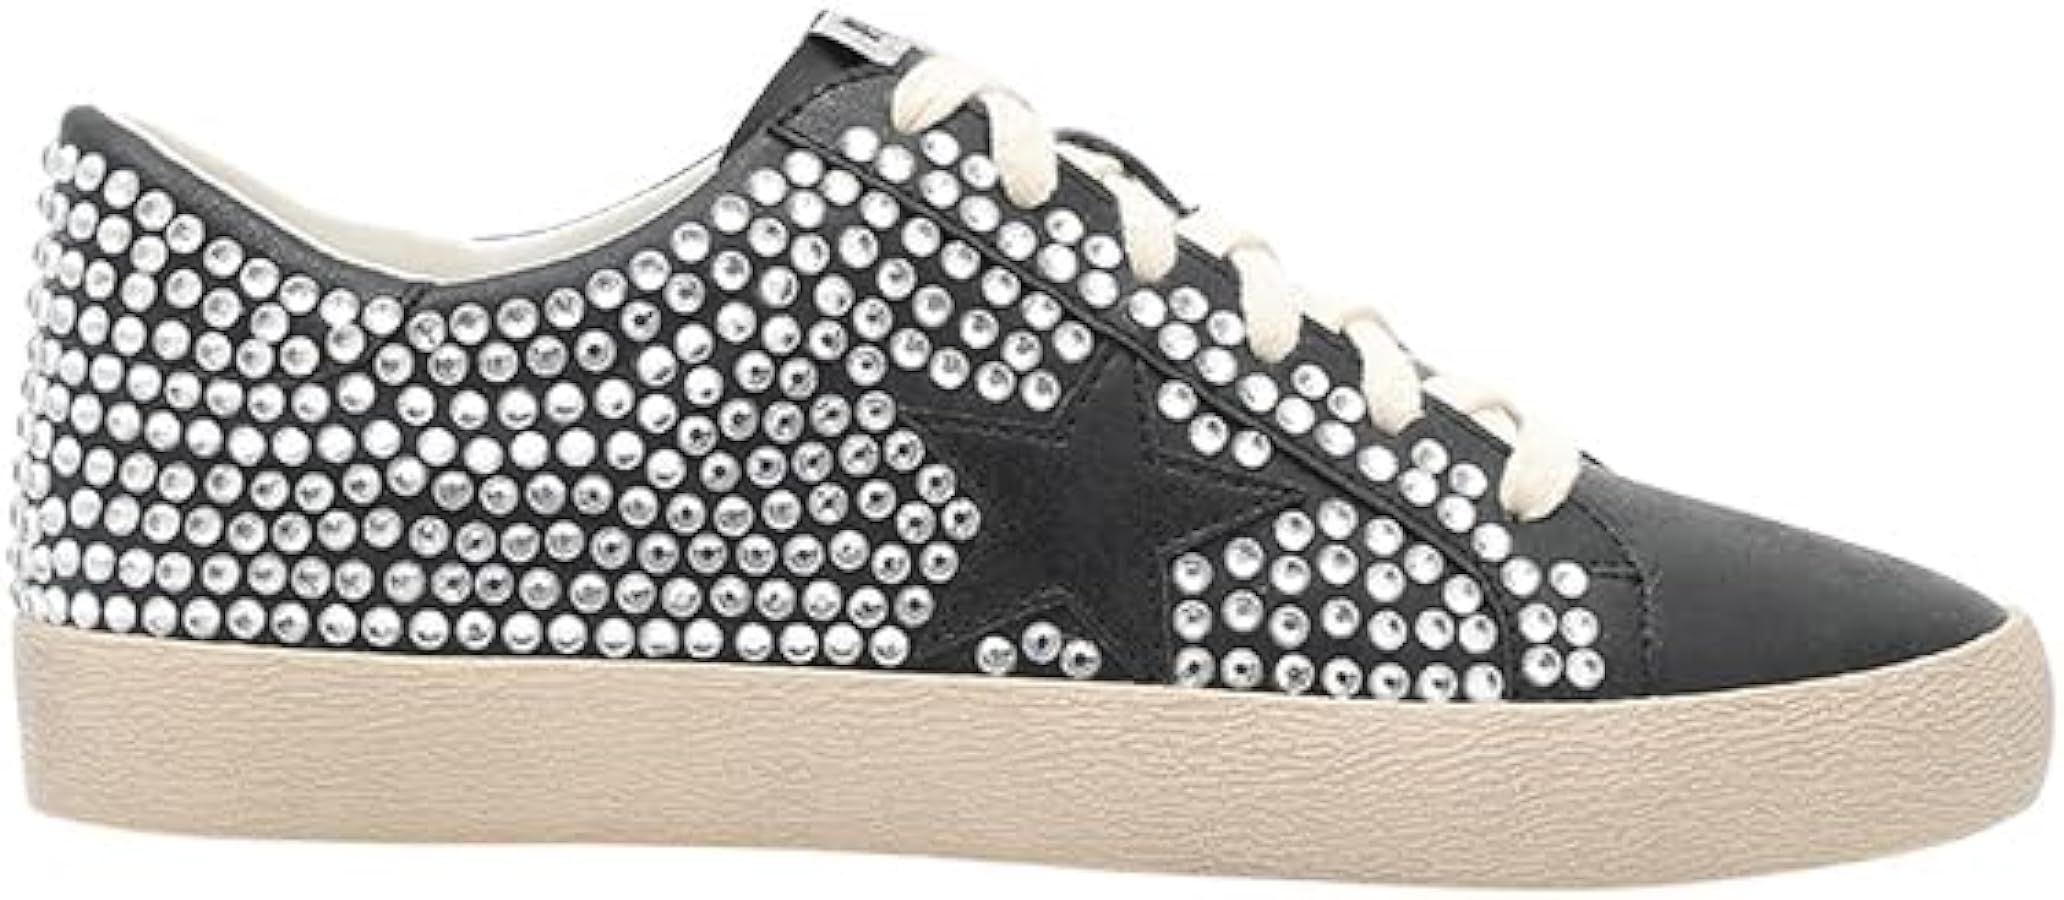 Mi.iM Joann Rubber Sole Lace-up Rhinestone Suede Star Sneakers | Amazon (US)